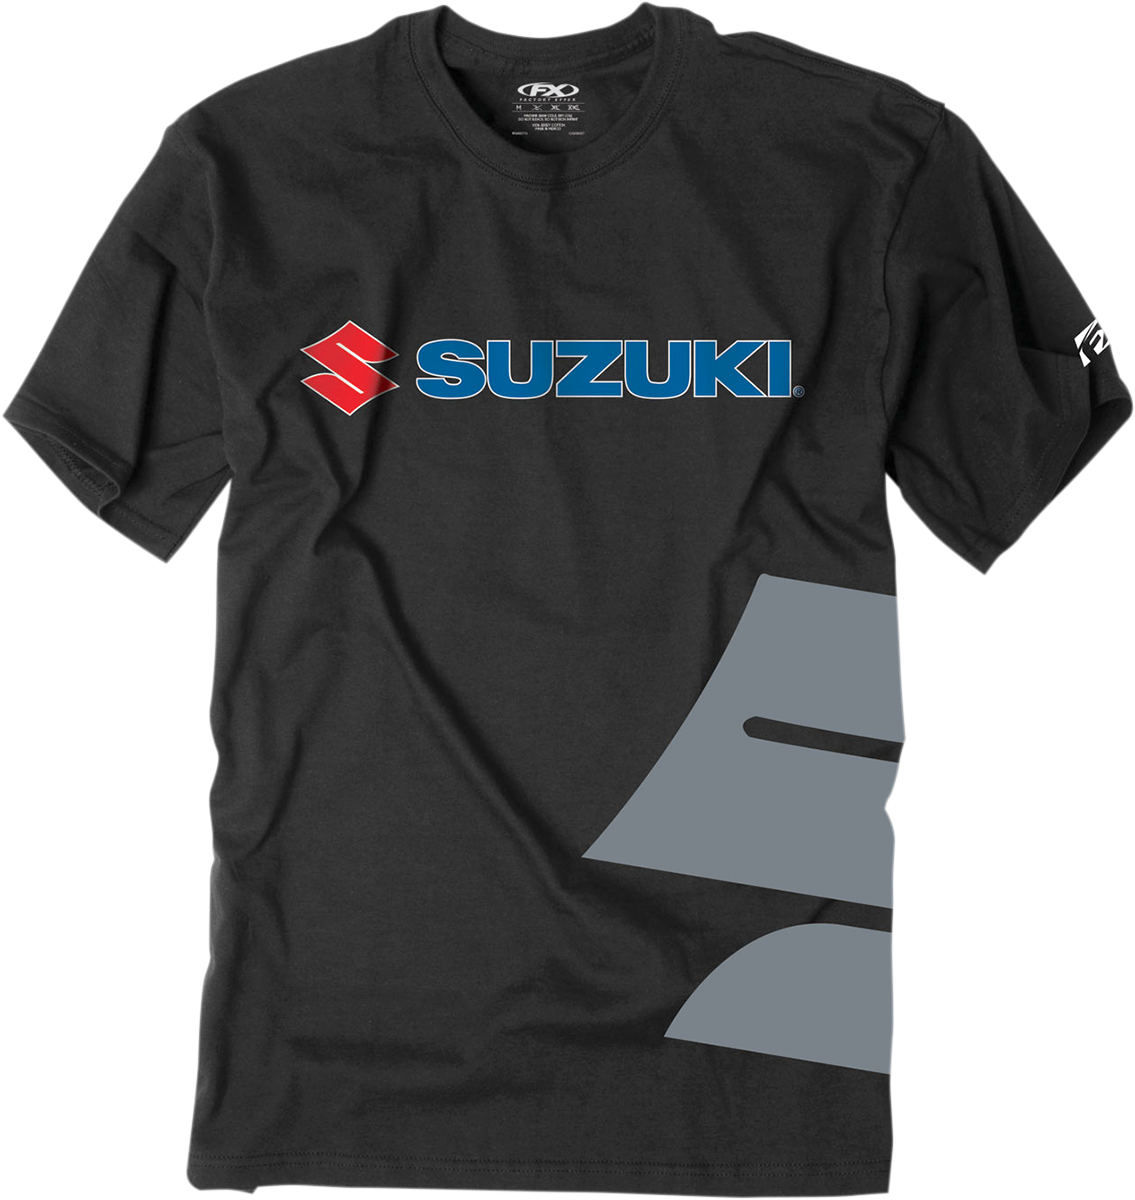 FACTORY EFFEX Suzuki Big S T-Shirt - Black - Large 15-88472